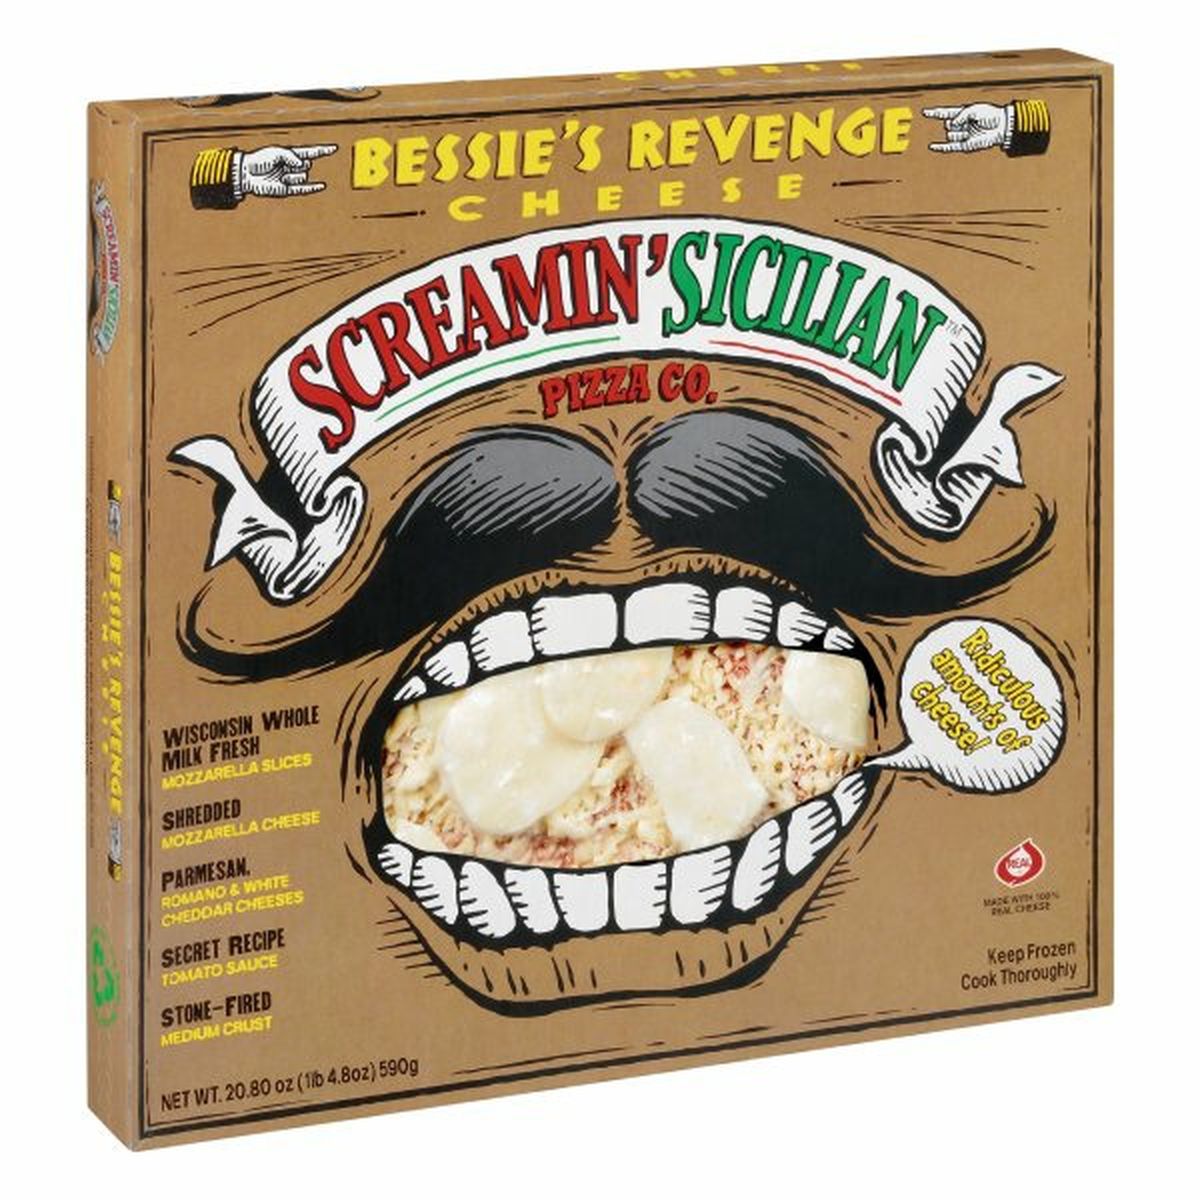 Calories in Screamin' Sicilian Pizza, Bessieâ€™s Revenge